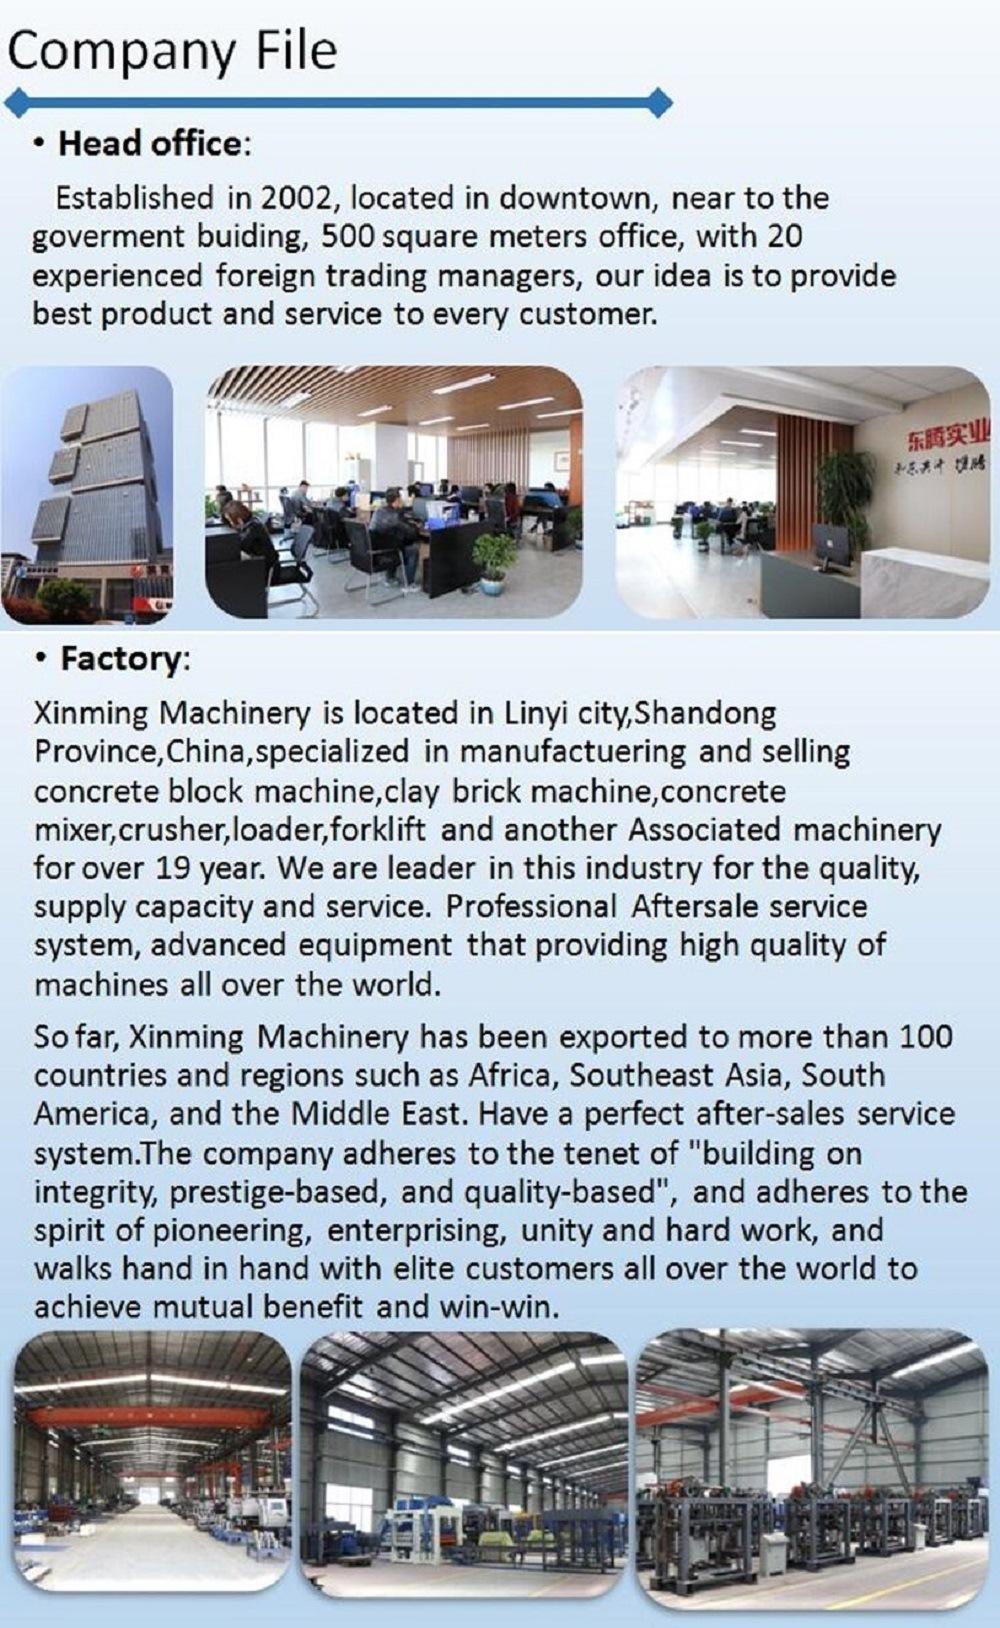 Xinming Xm2-25 Manual Clay Mud Brick Making Machine with Factory Price